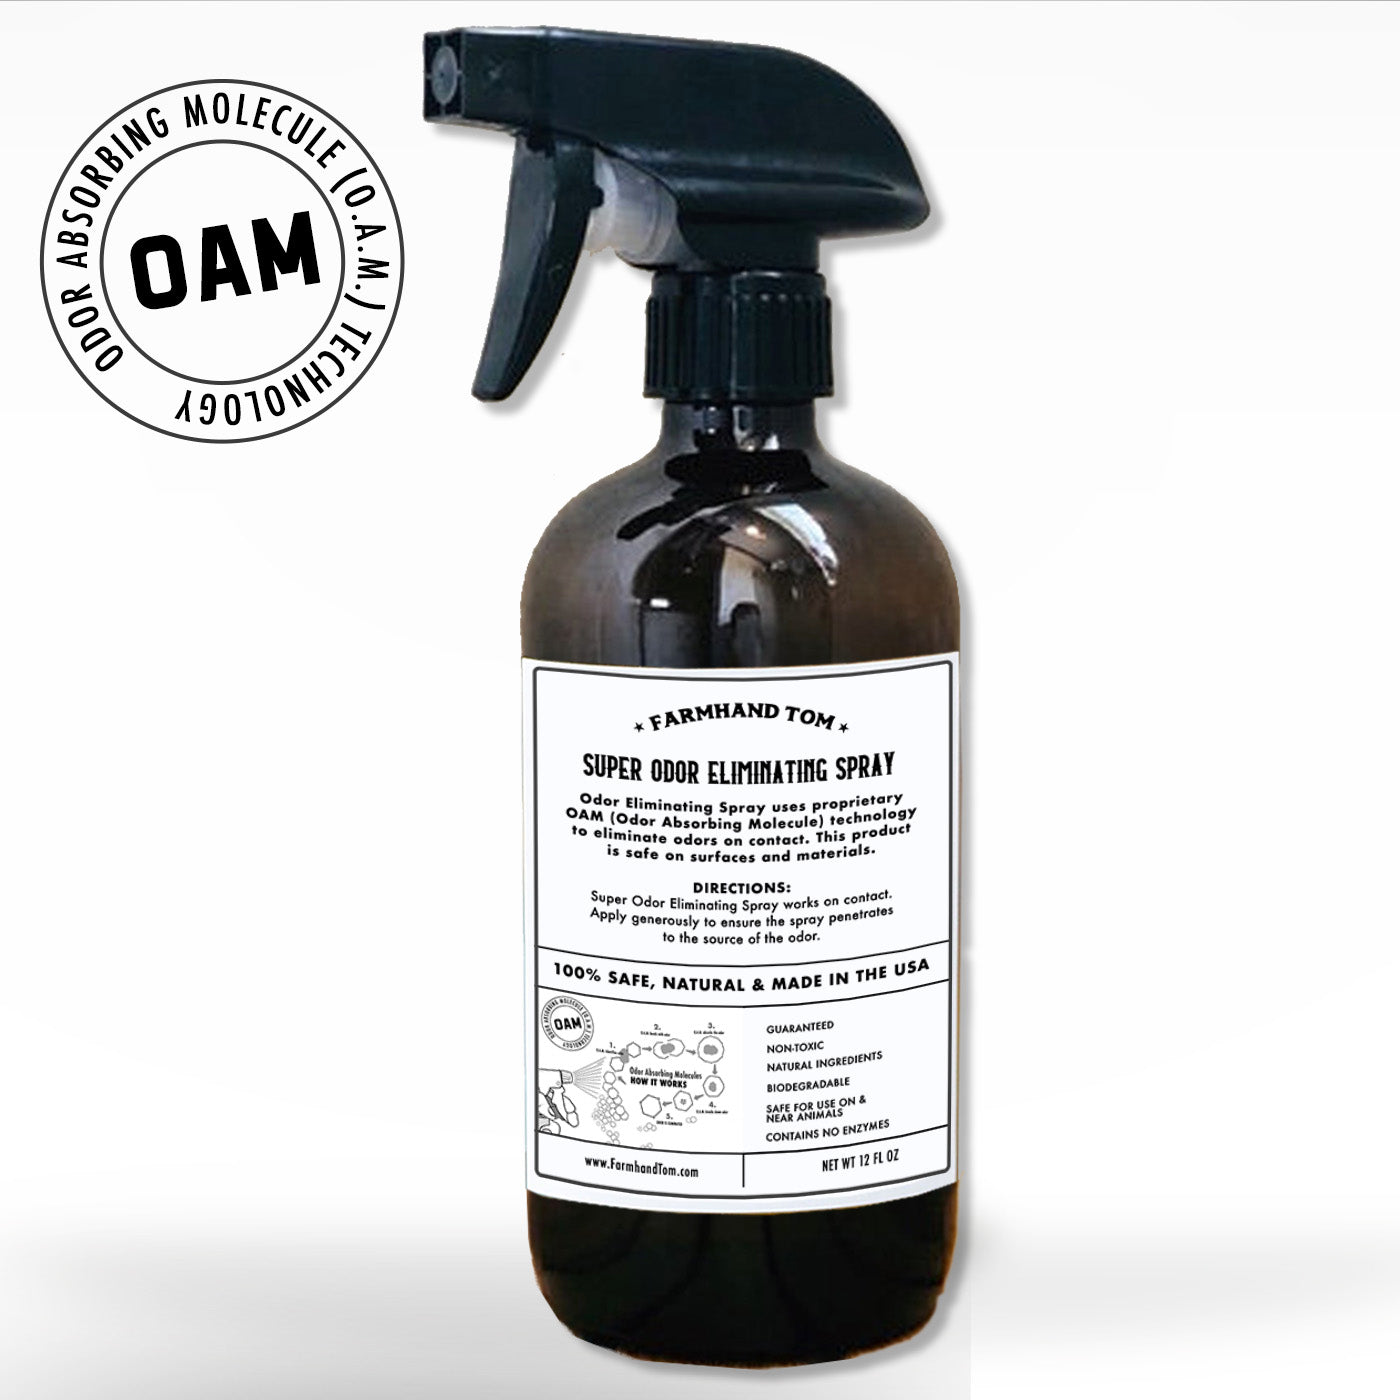 CATTLE | Super Odor Eliminating Spray